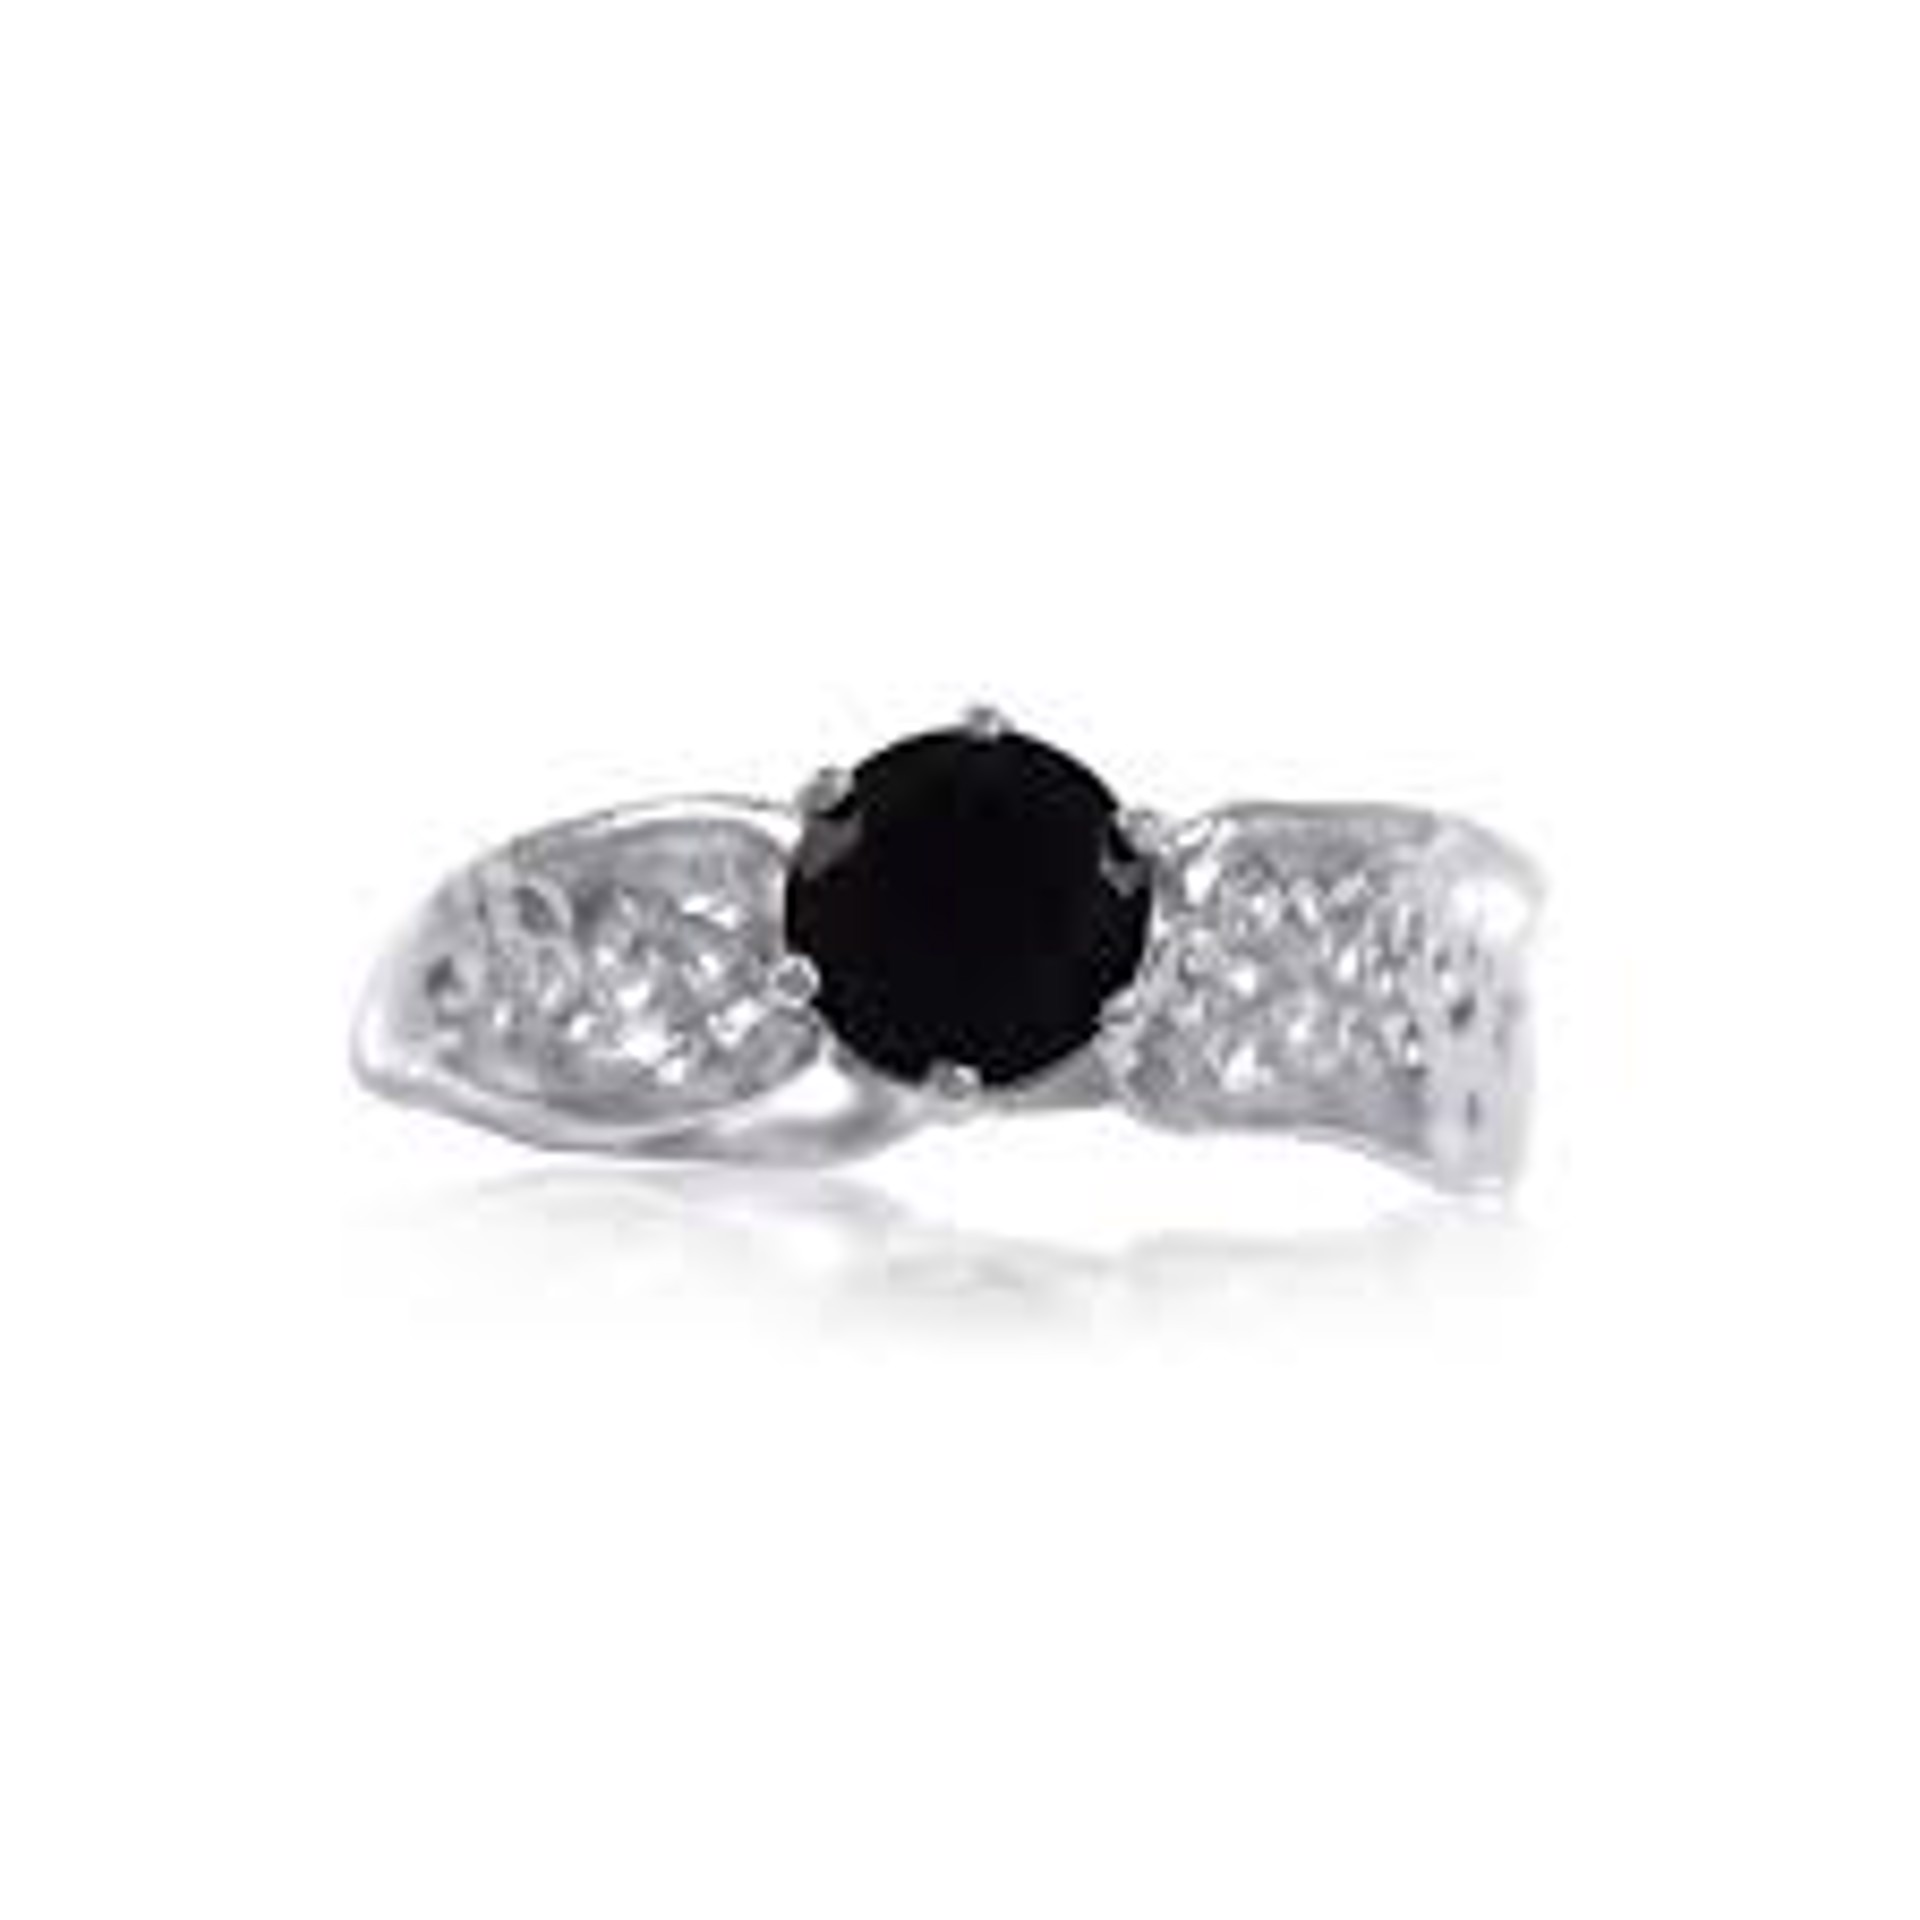 Sunbeam Black Onyx Ring by Kristen Baird